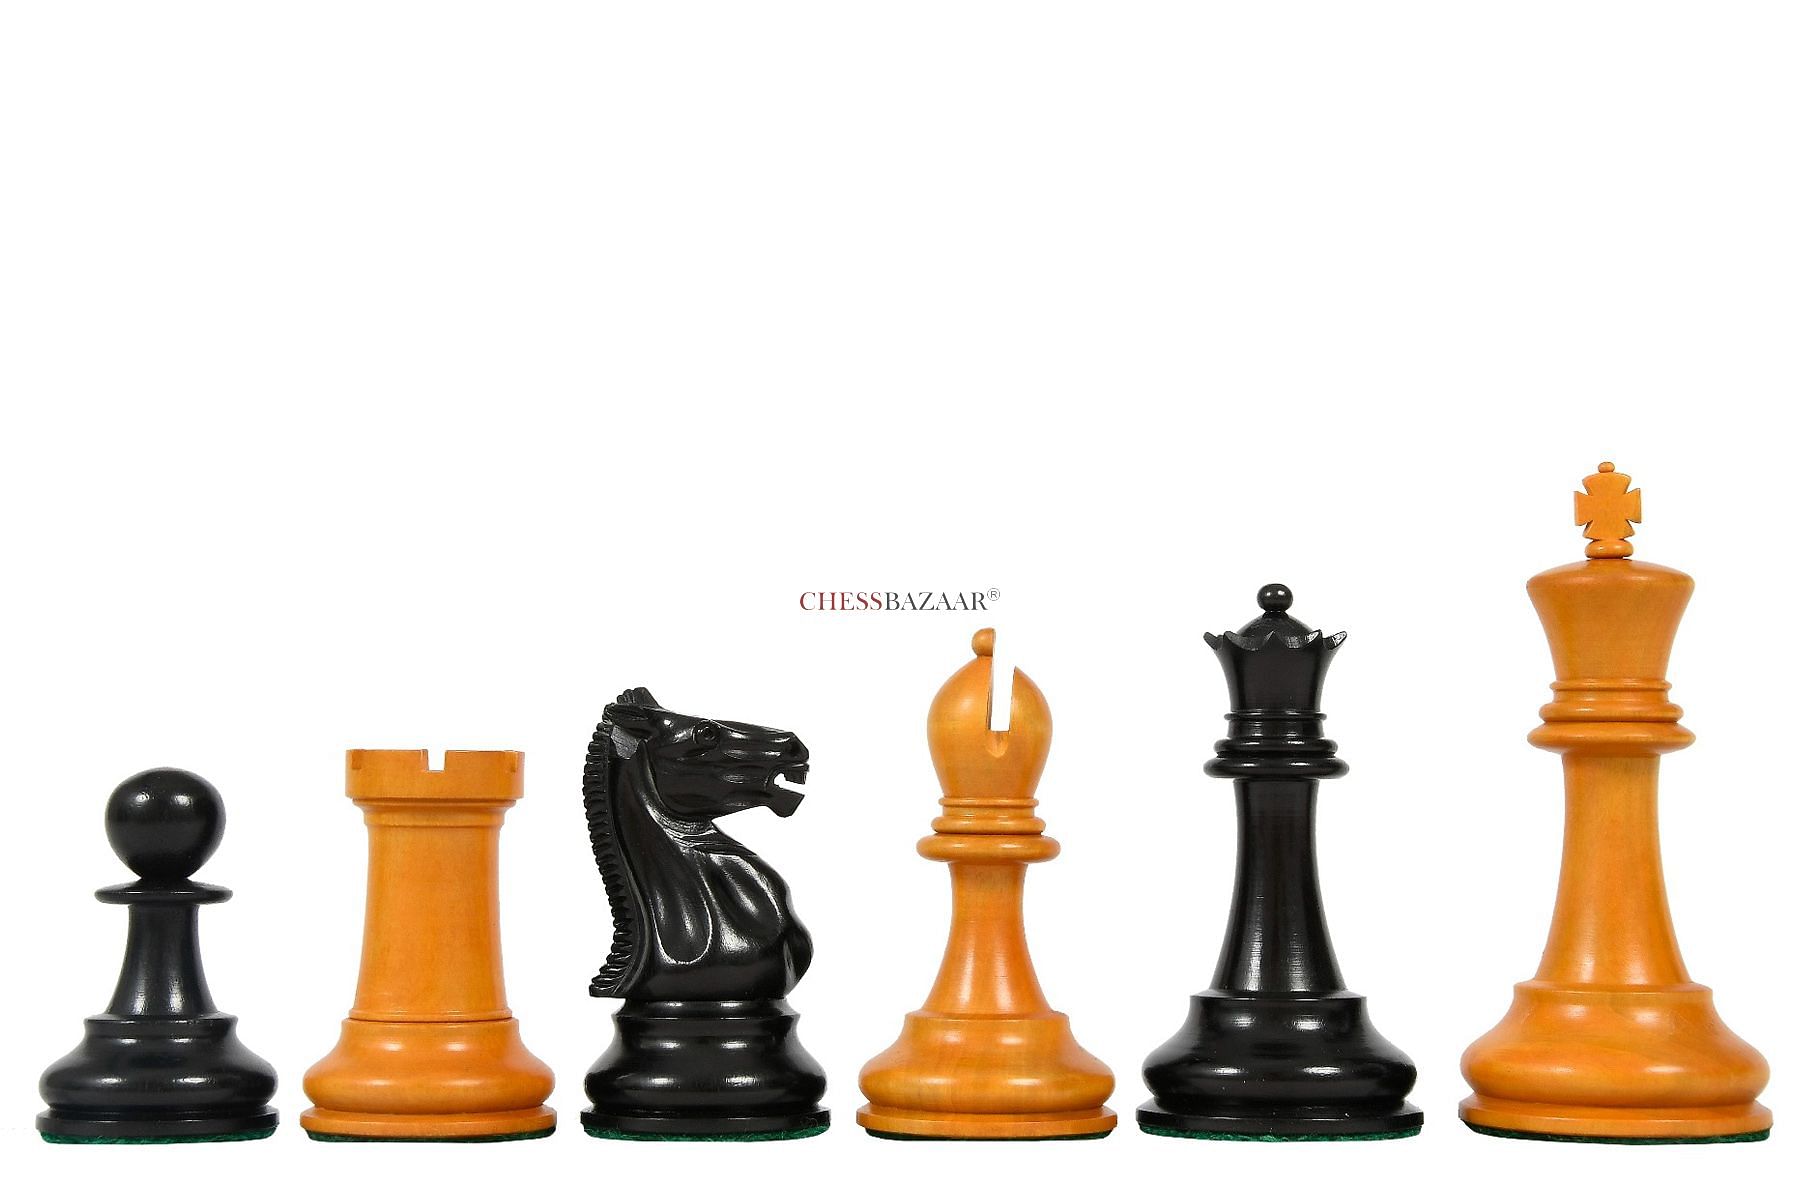 Marshall Staunton Chessmen in Rosewood - www.